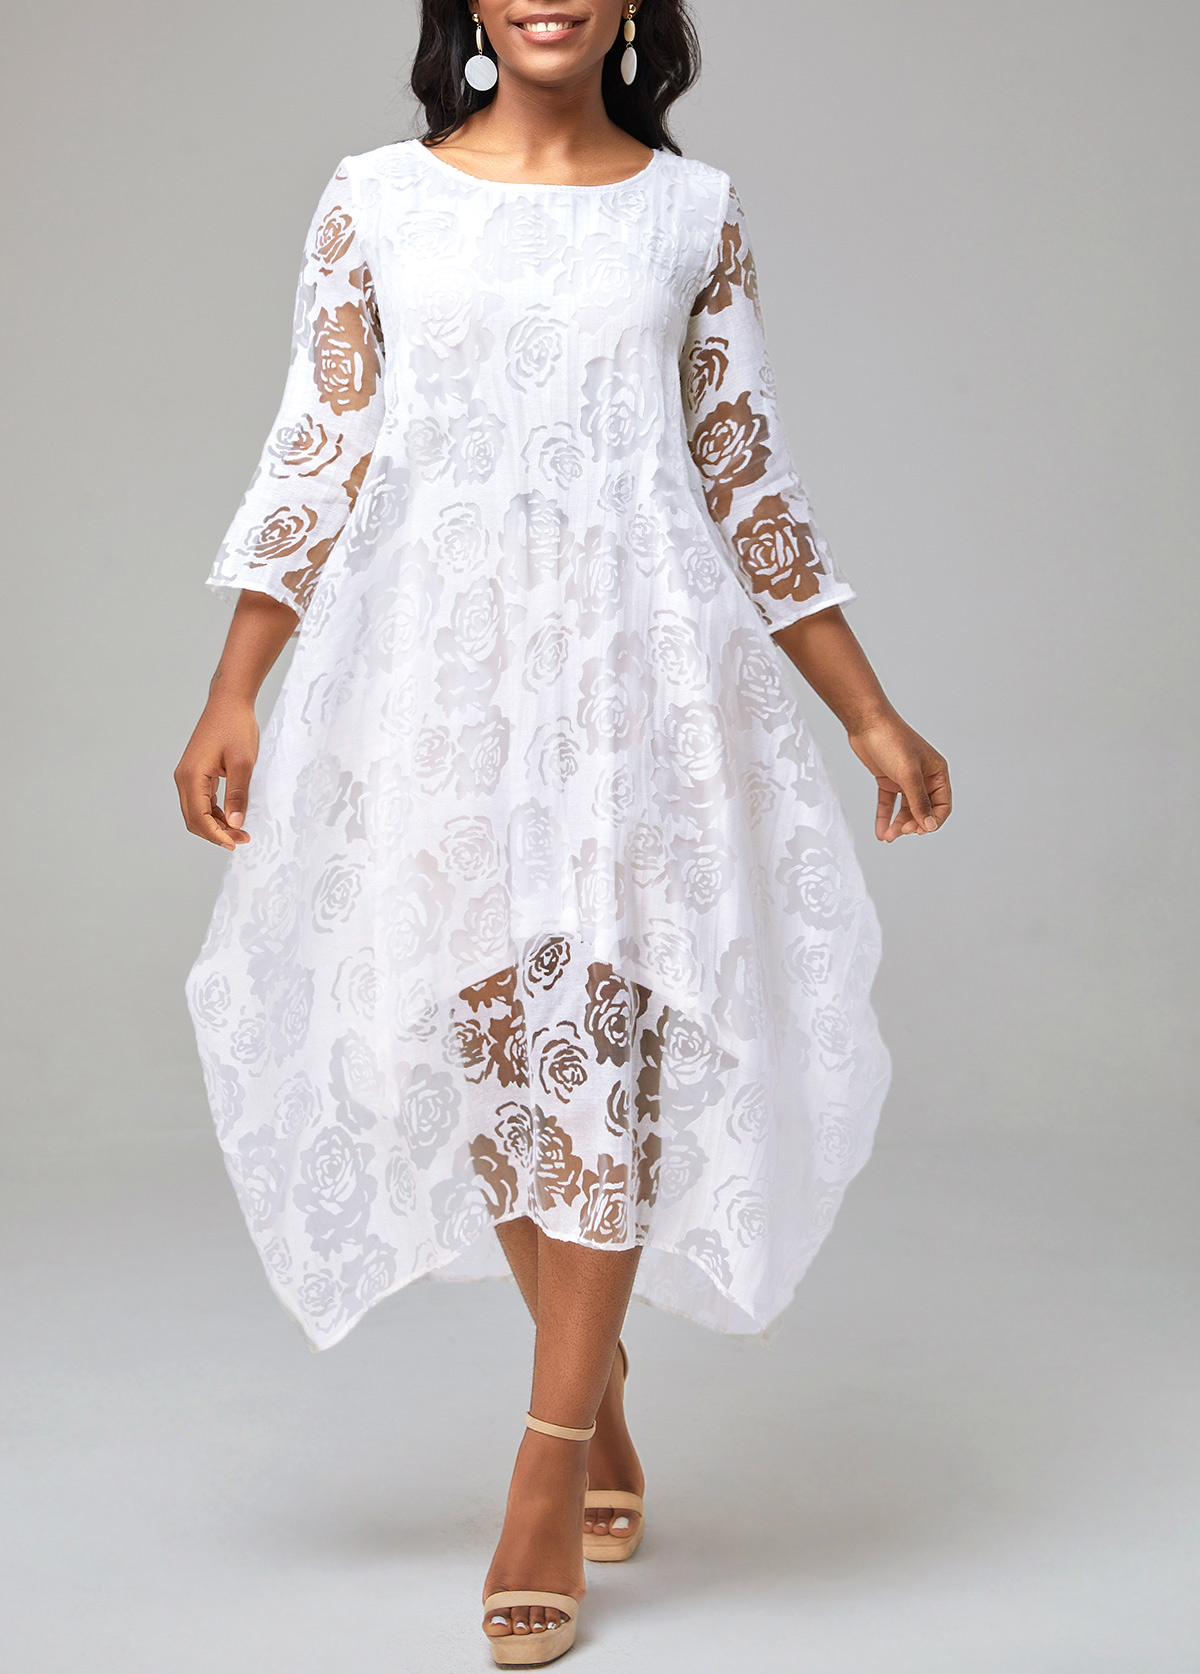 ROTITA Valentine's Day Asymmetry Floral Print White Dress